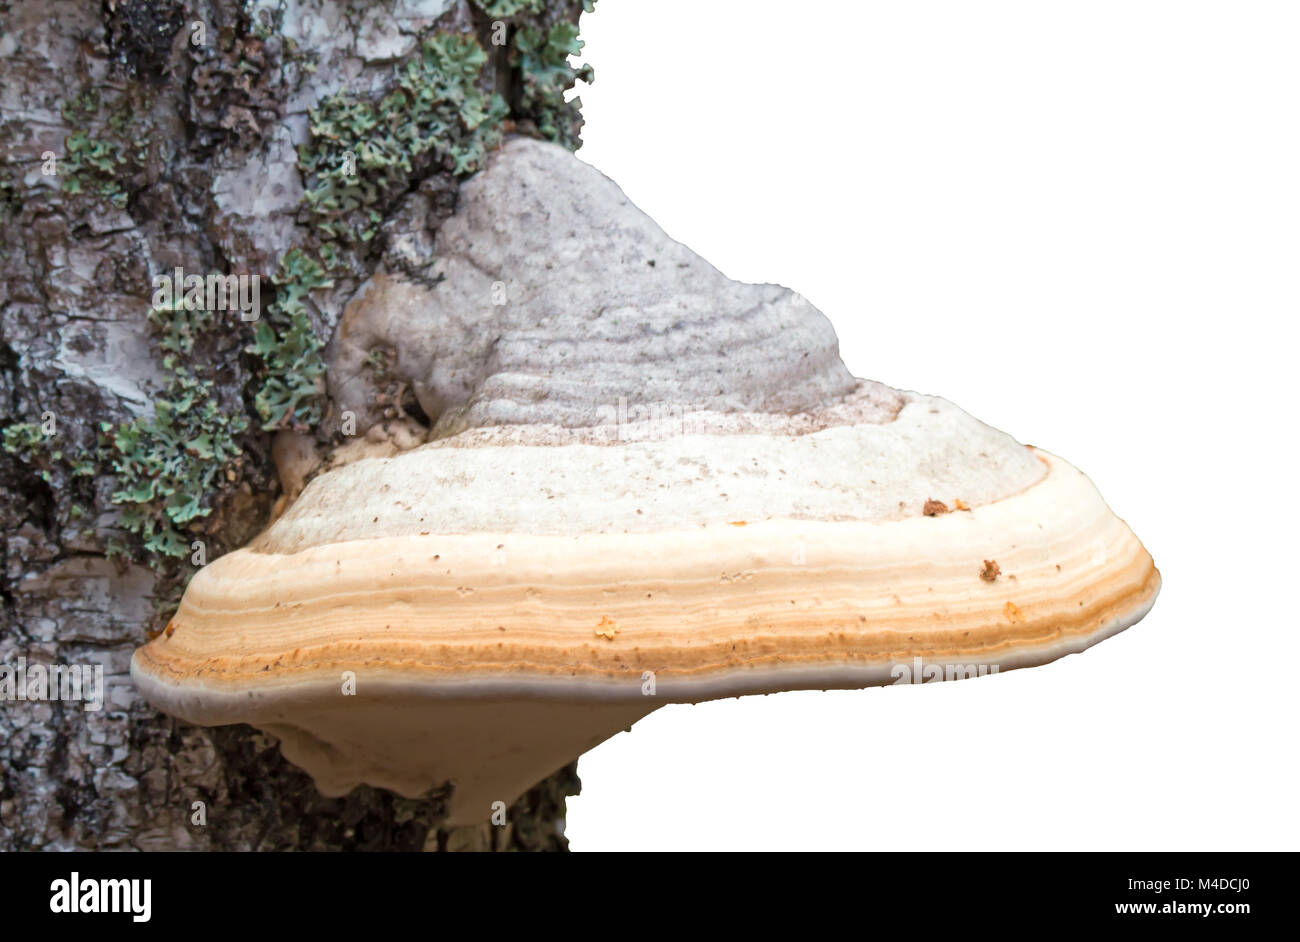 Tinder fungus grows on birch. Stock Photo